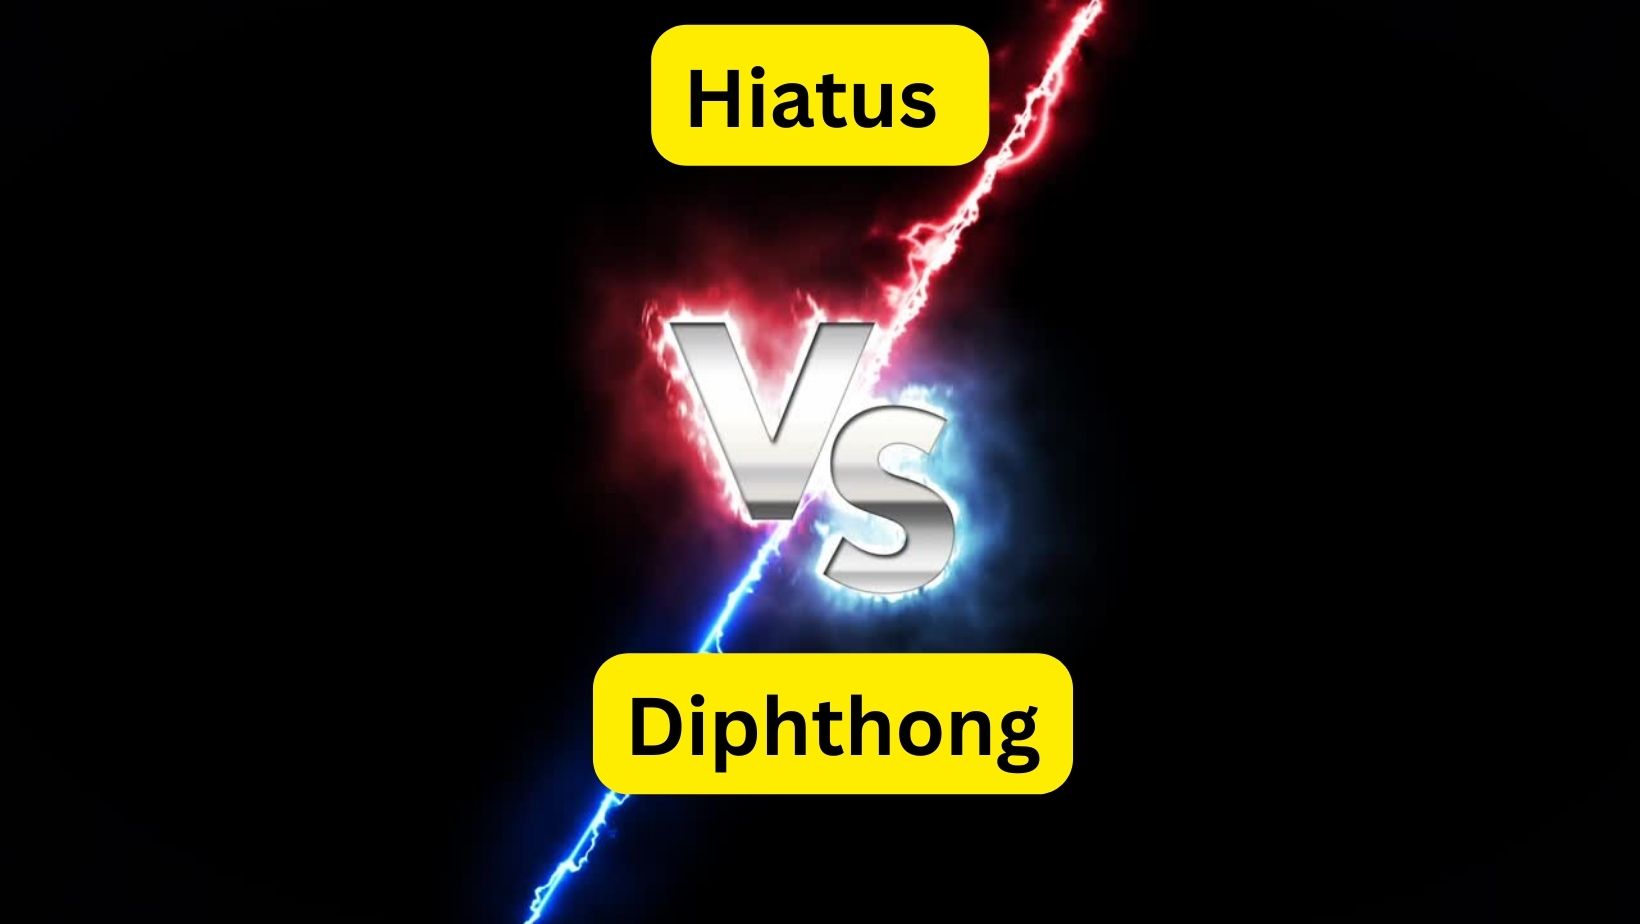 Hiatus and Diphthong